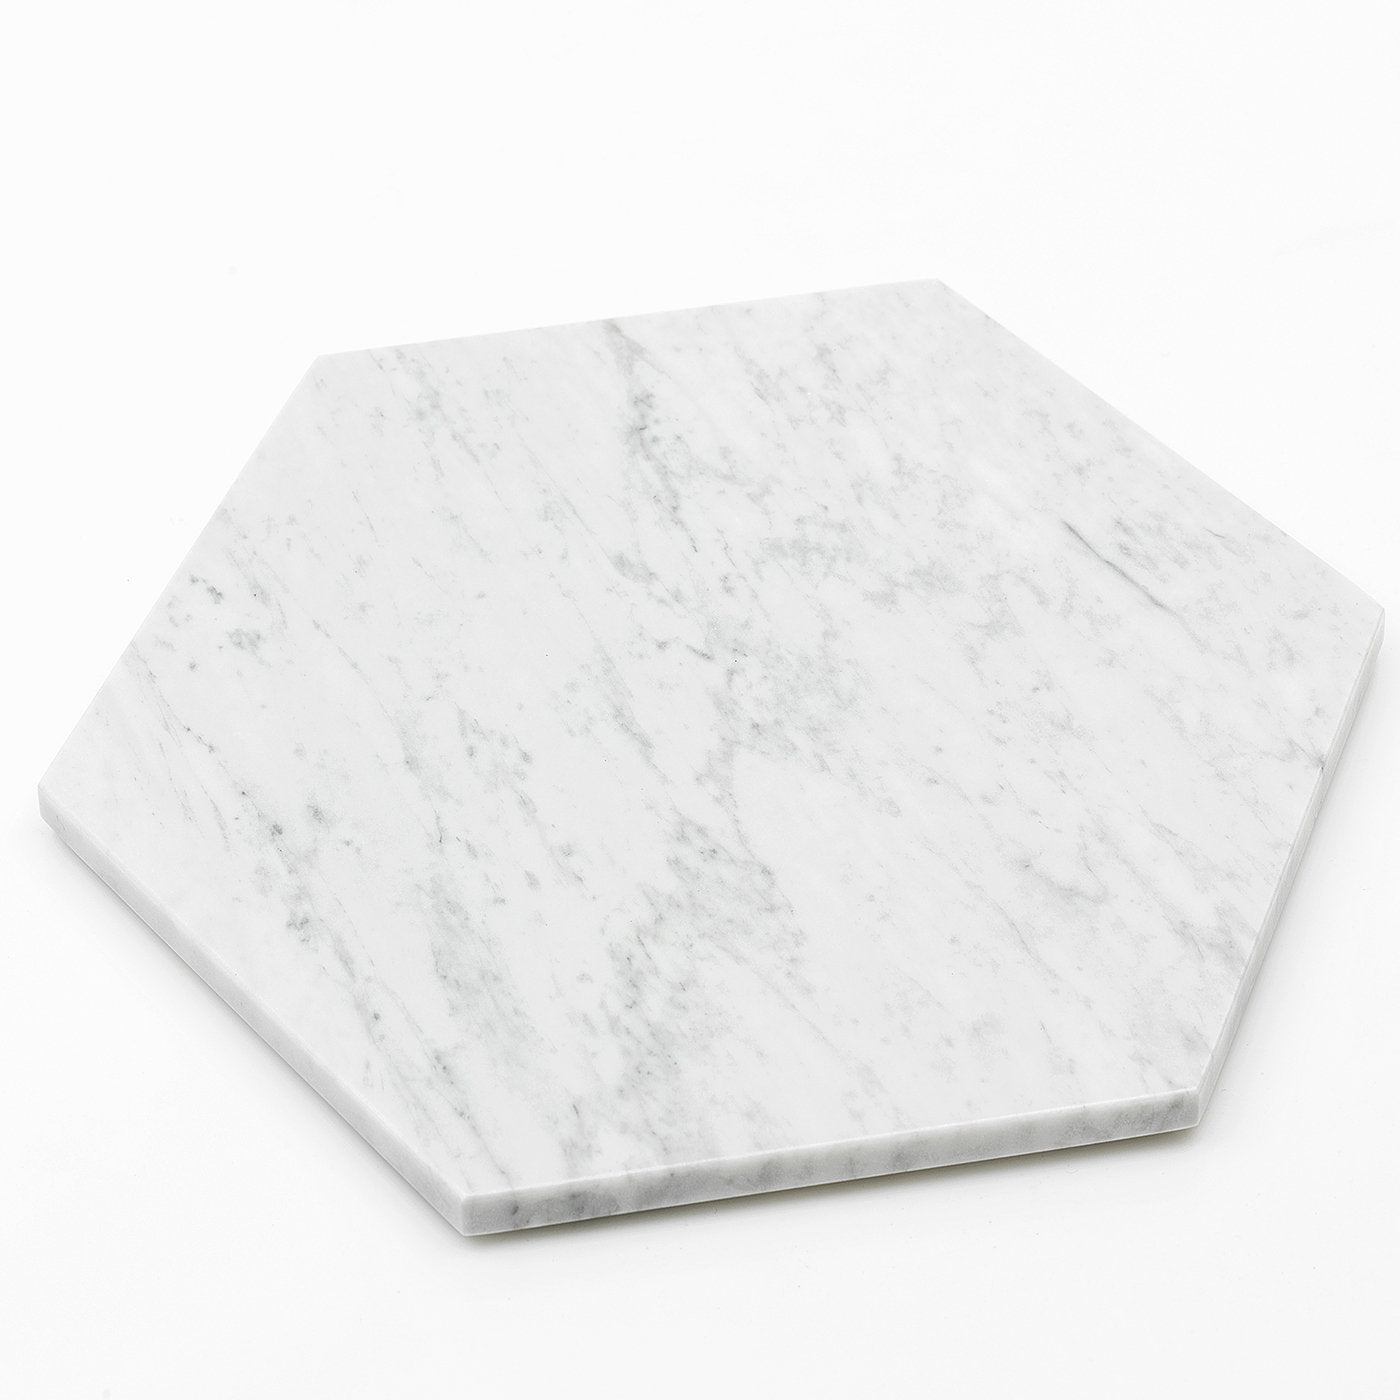 Hexagonal Carrara Marble Plate - Alternative view 2